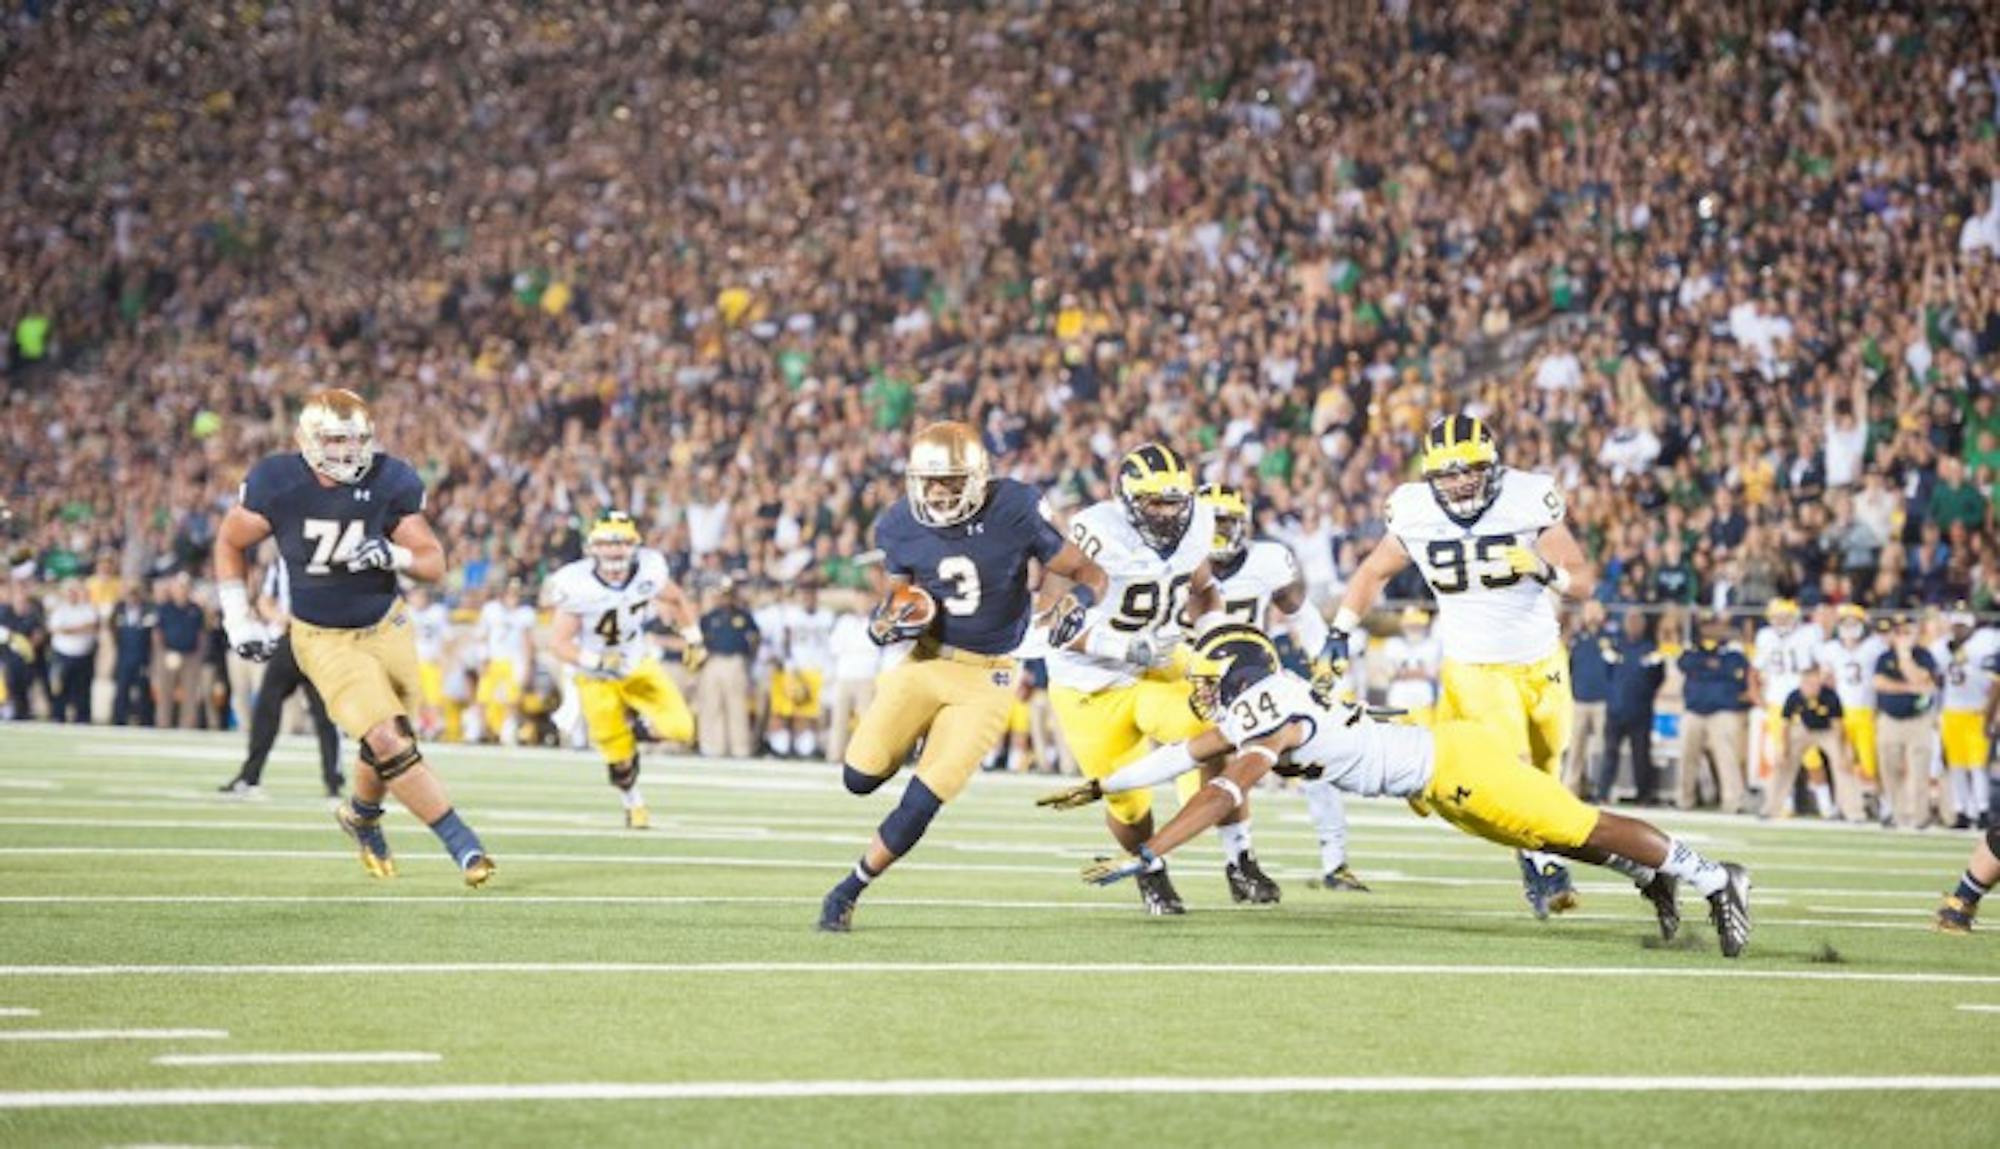 Irish senior receiver Amir Carlisle eludes a Michigan defender during Notre Dame’s 31-0 victory over Michigan on Saturday.